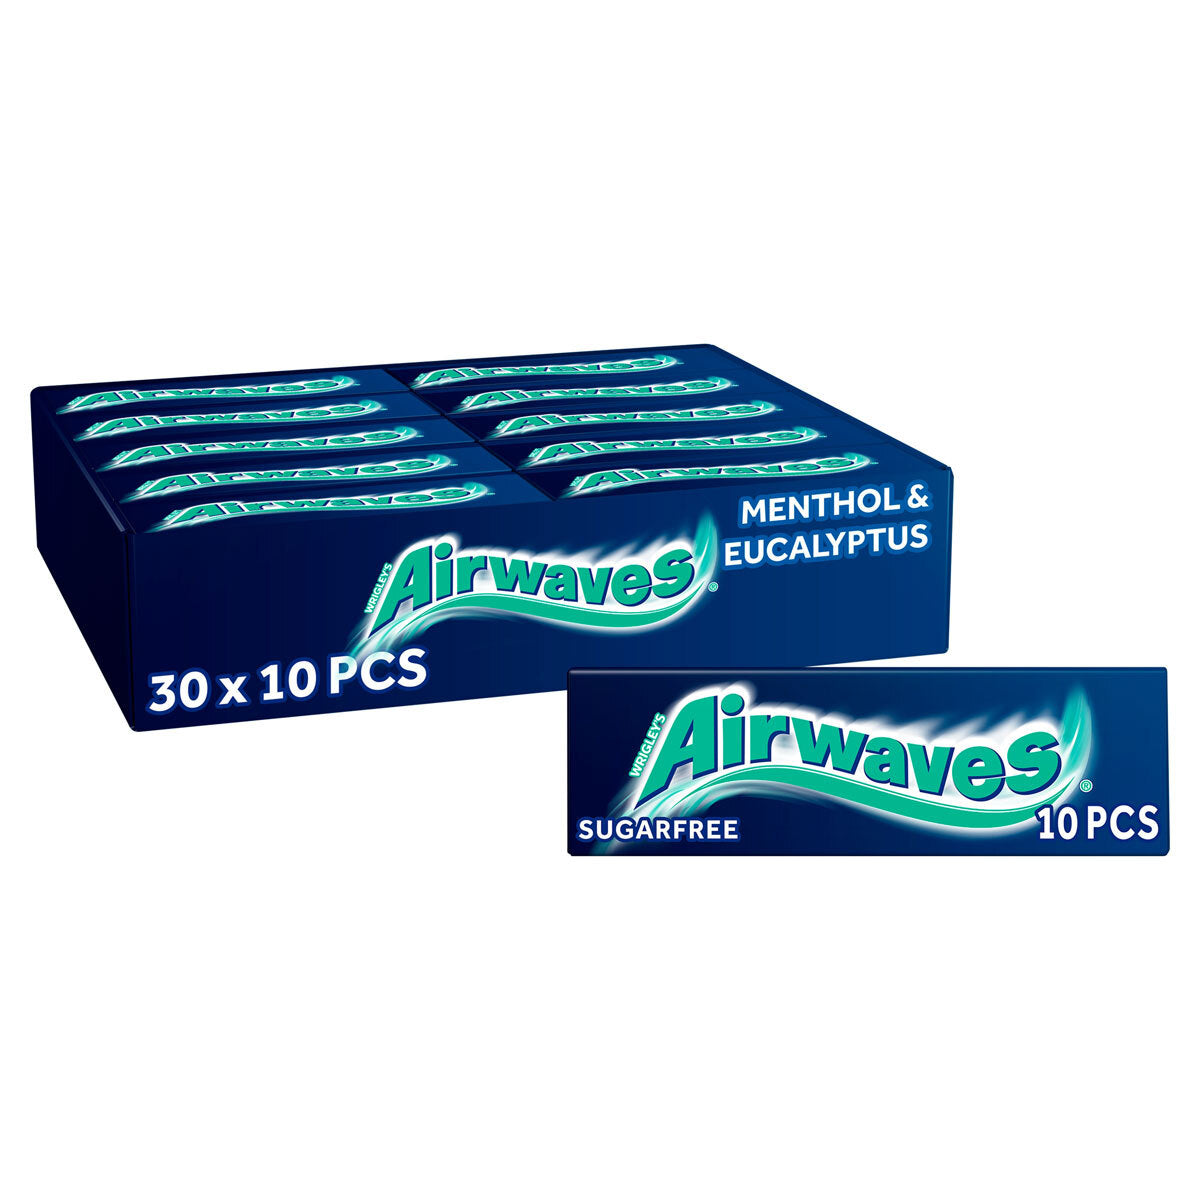 Wrigley's Airwaves Menthol & Eucalyptus Chewing Gum, 30 x 10 Pack Snacks Costco UK Pack  